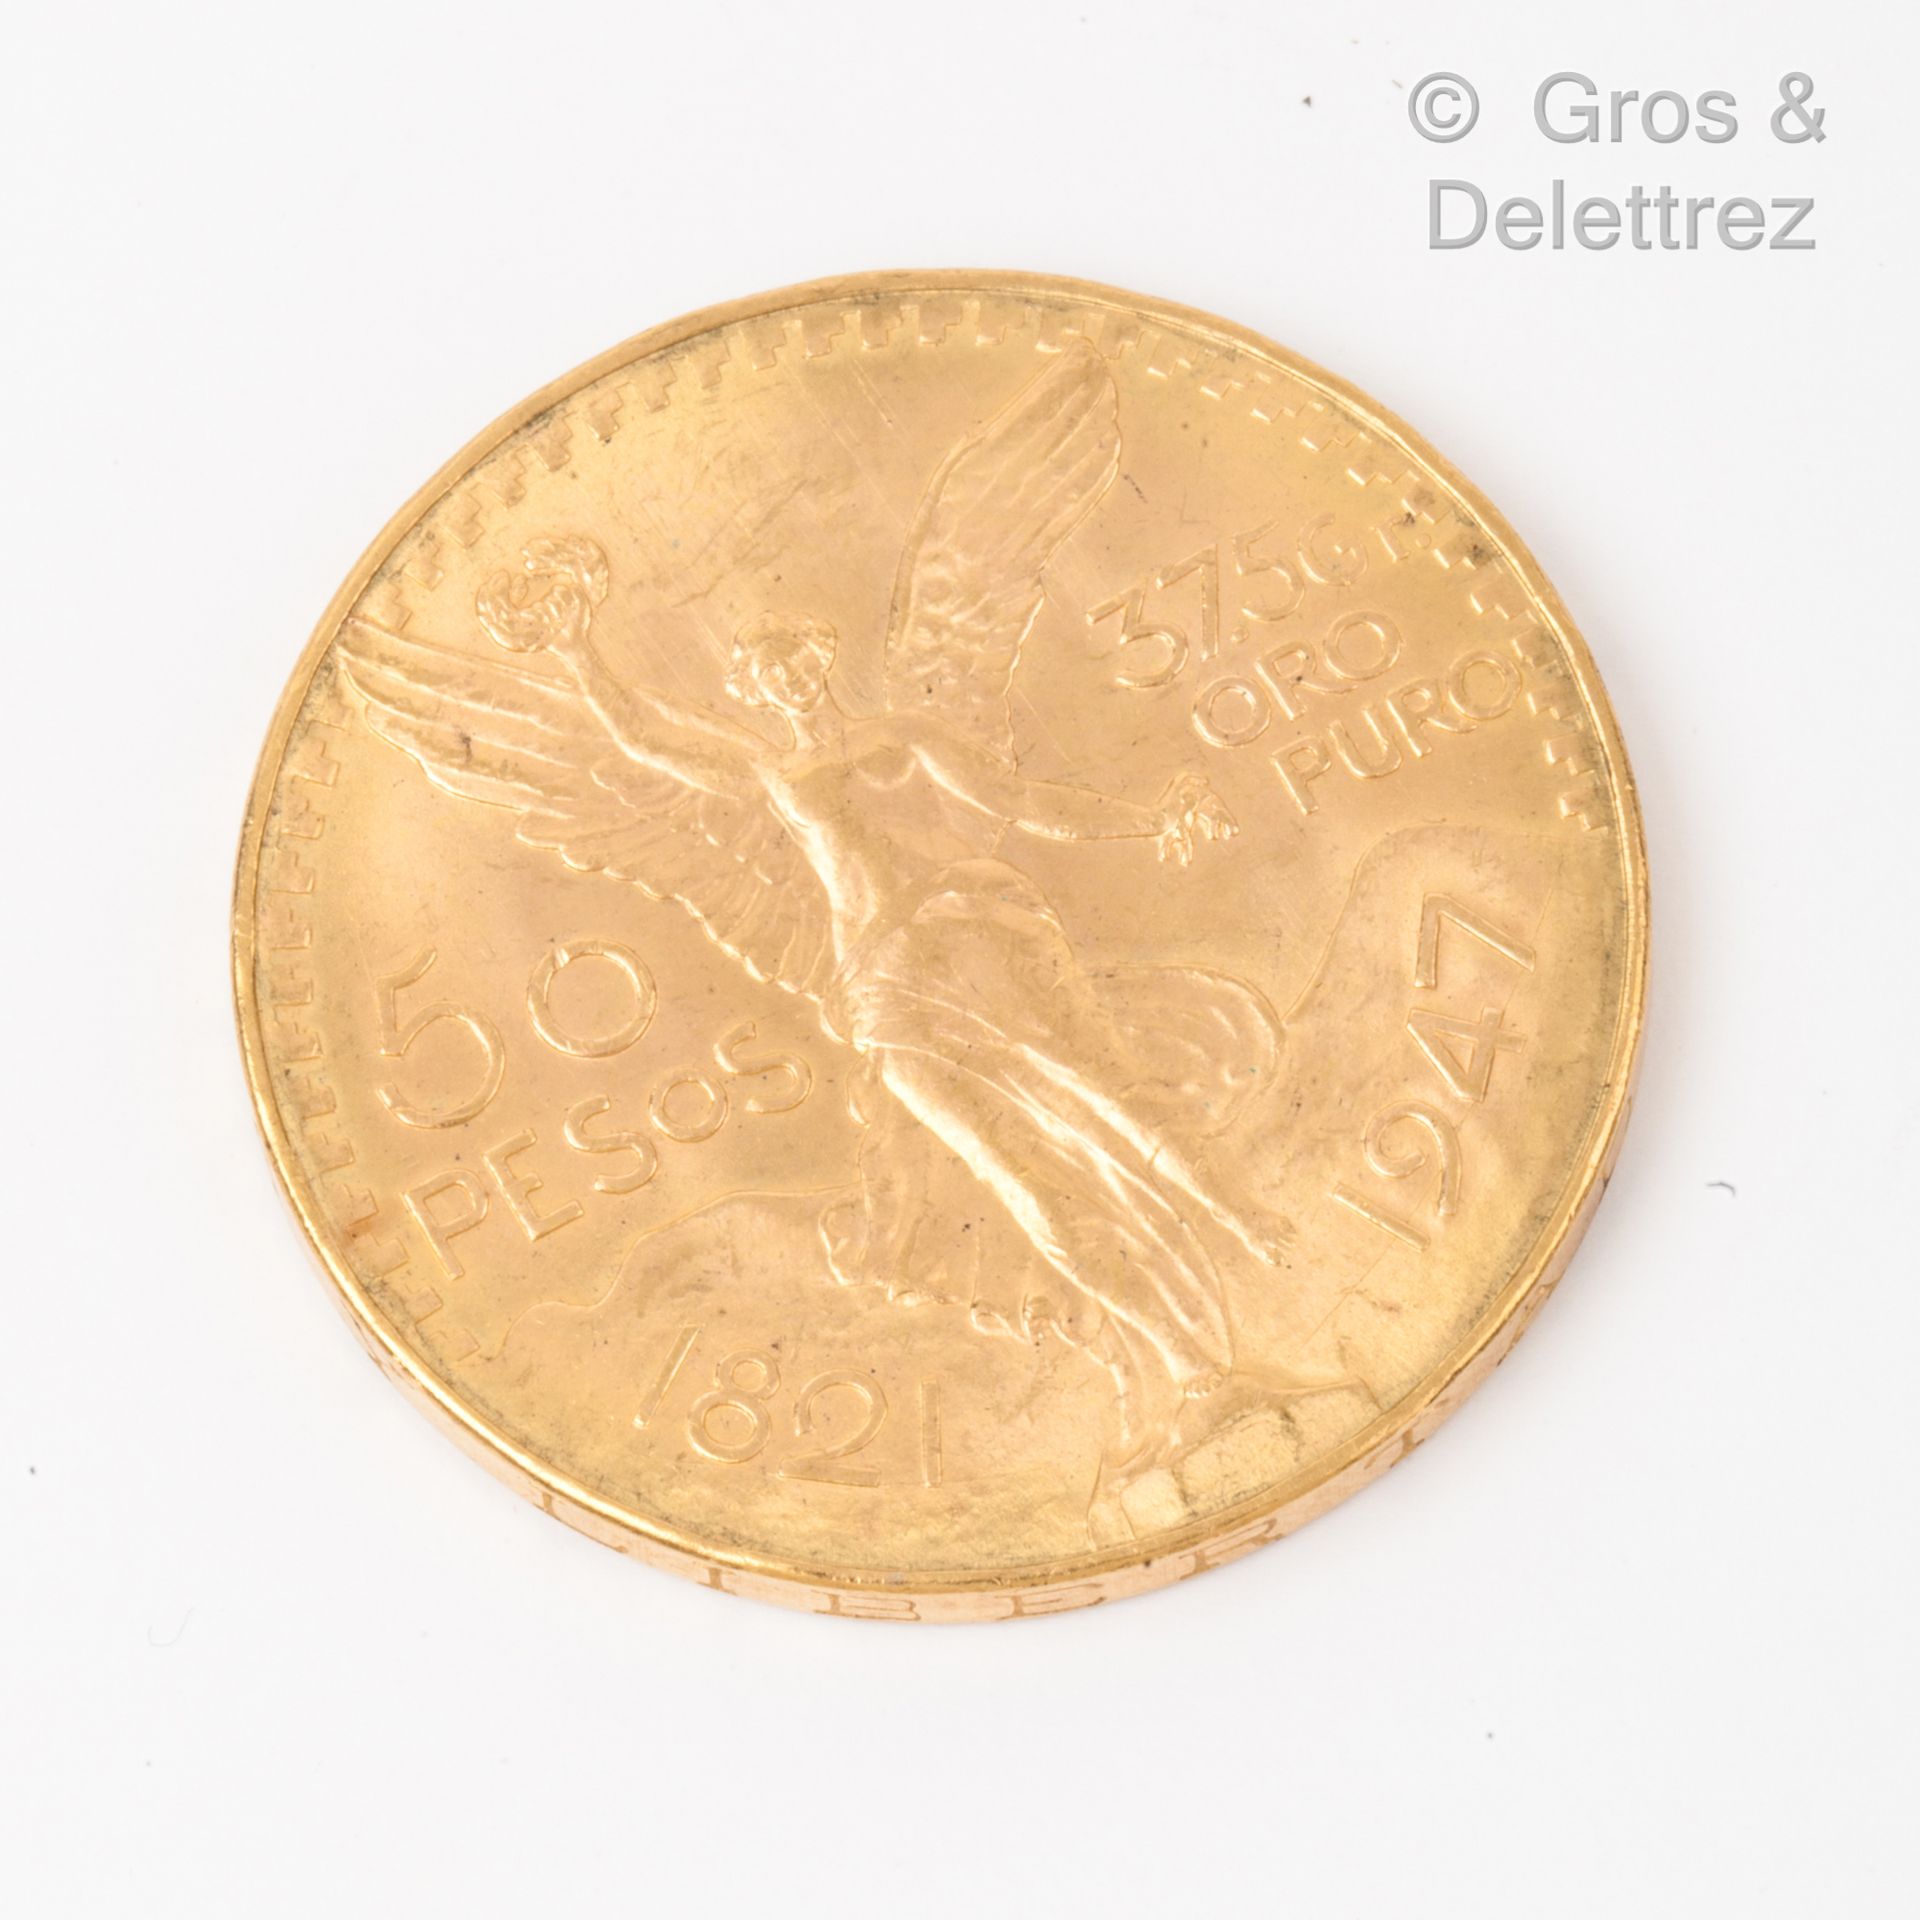 Null Moneta d'oro da 50 Pesos messicani. (1821-1947) Peso lordo: 41,8g.